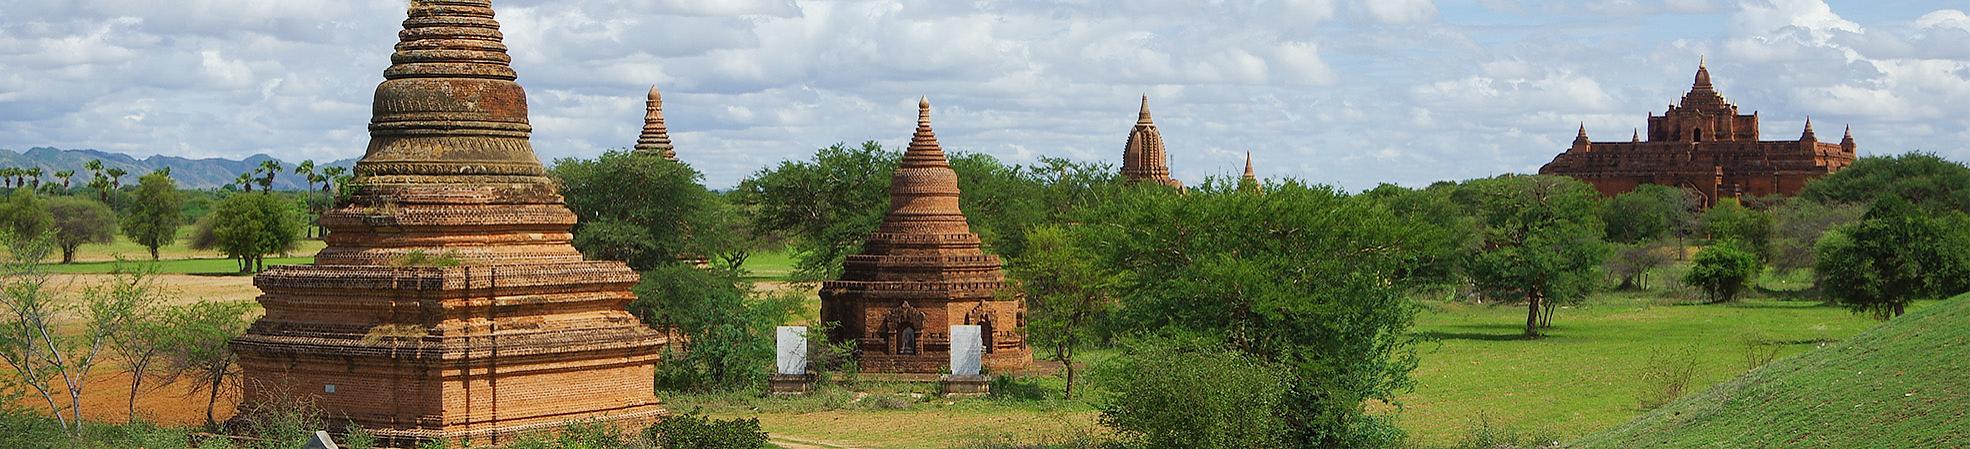 Bagan, Myanmar: How to Enhance Your Visit 